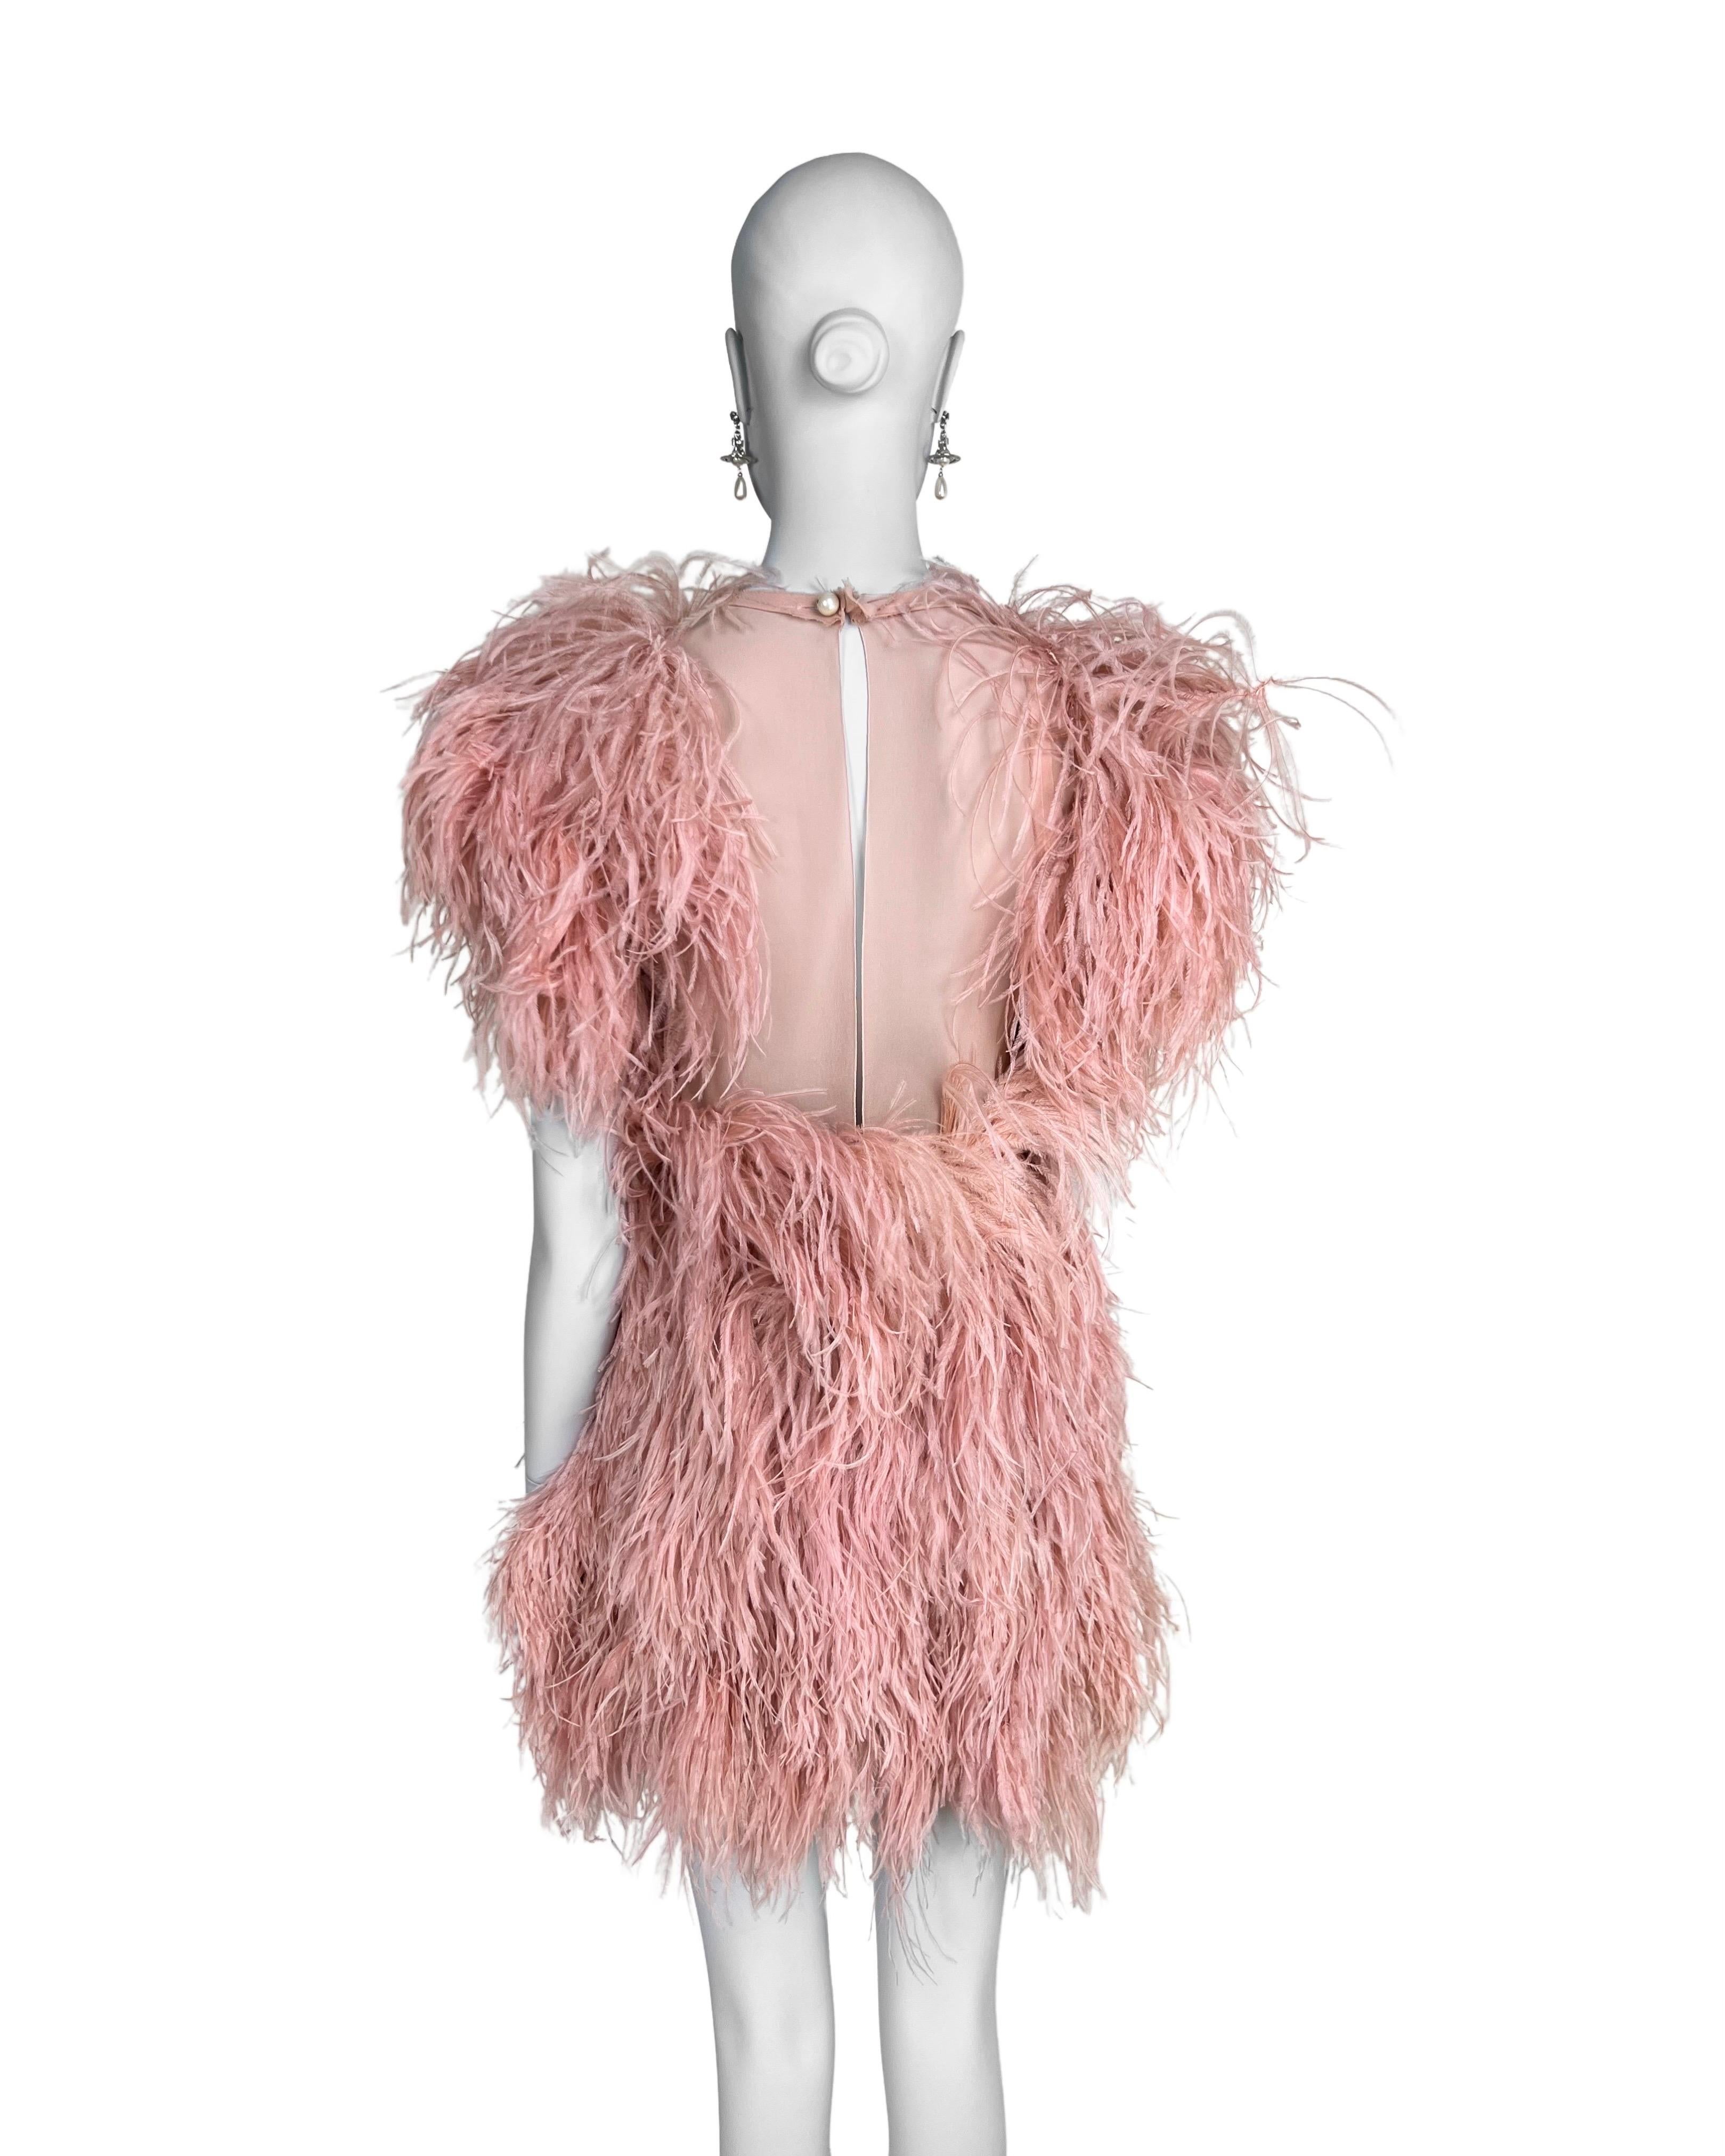 Sonia Rykiel Fall 2010 Ostrich Feather Dress For Sale 1